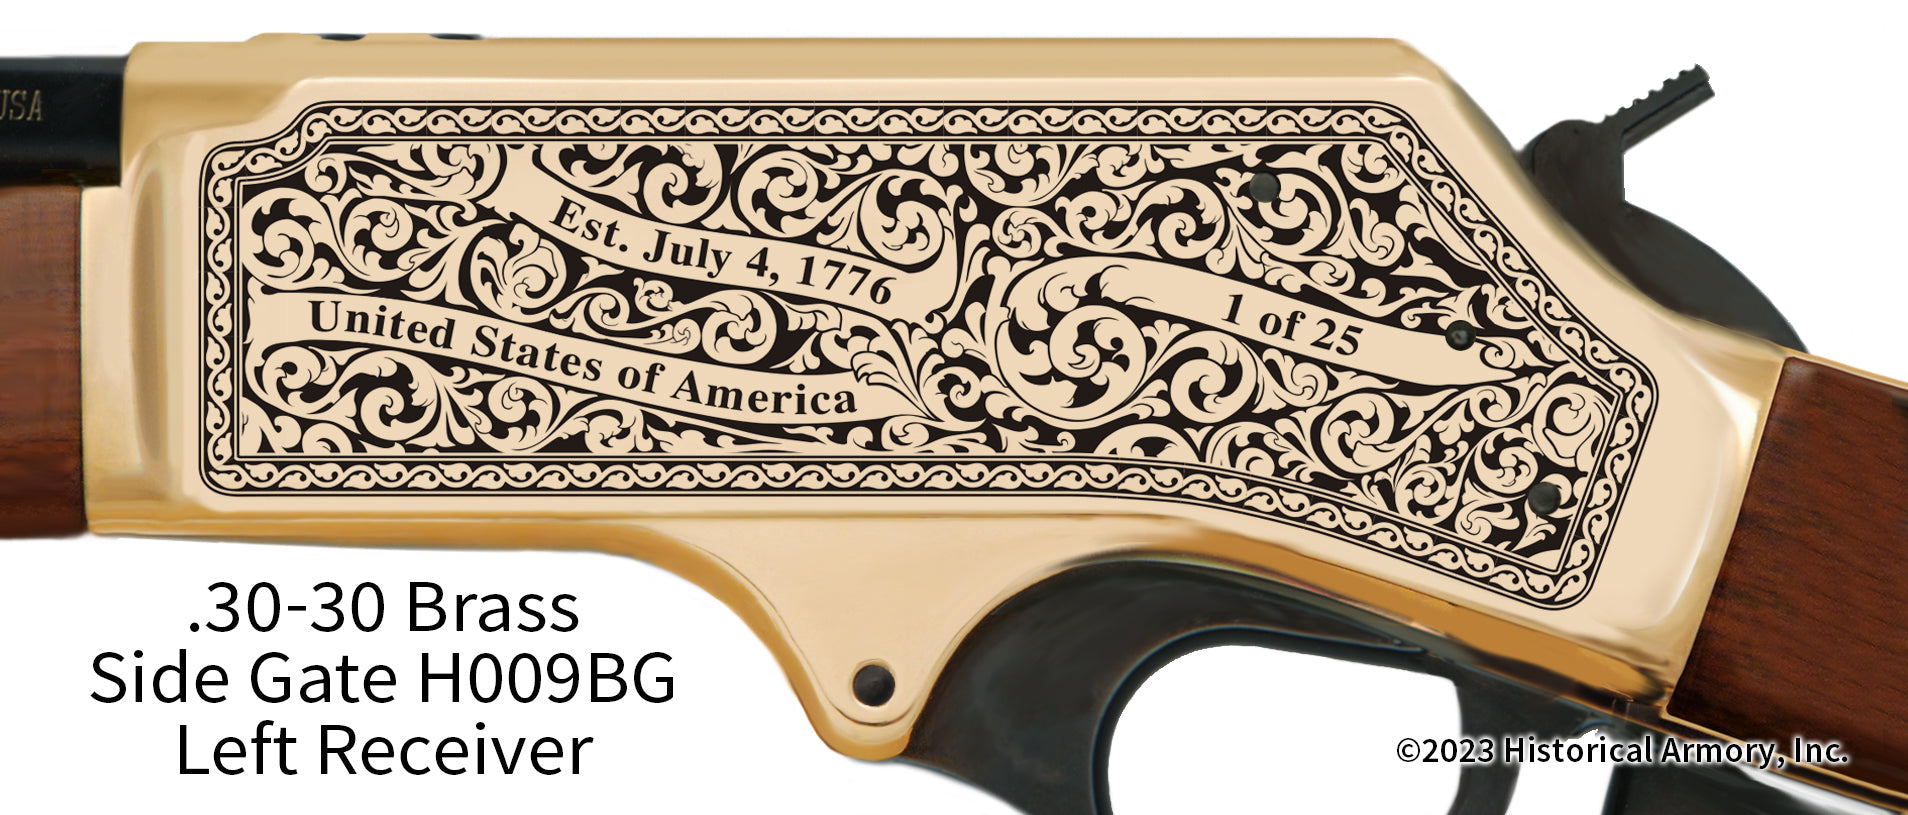 Carlton County Minnesota Engraved Henry .30-30 Brass Side Gate Rifle